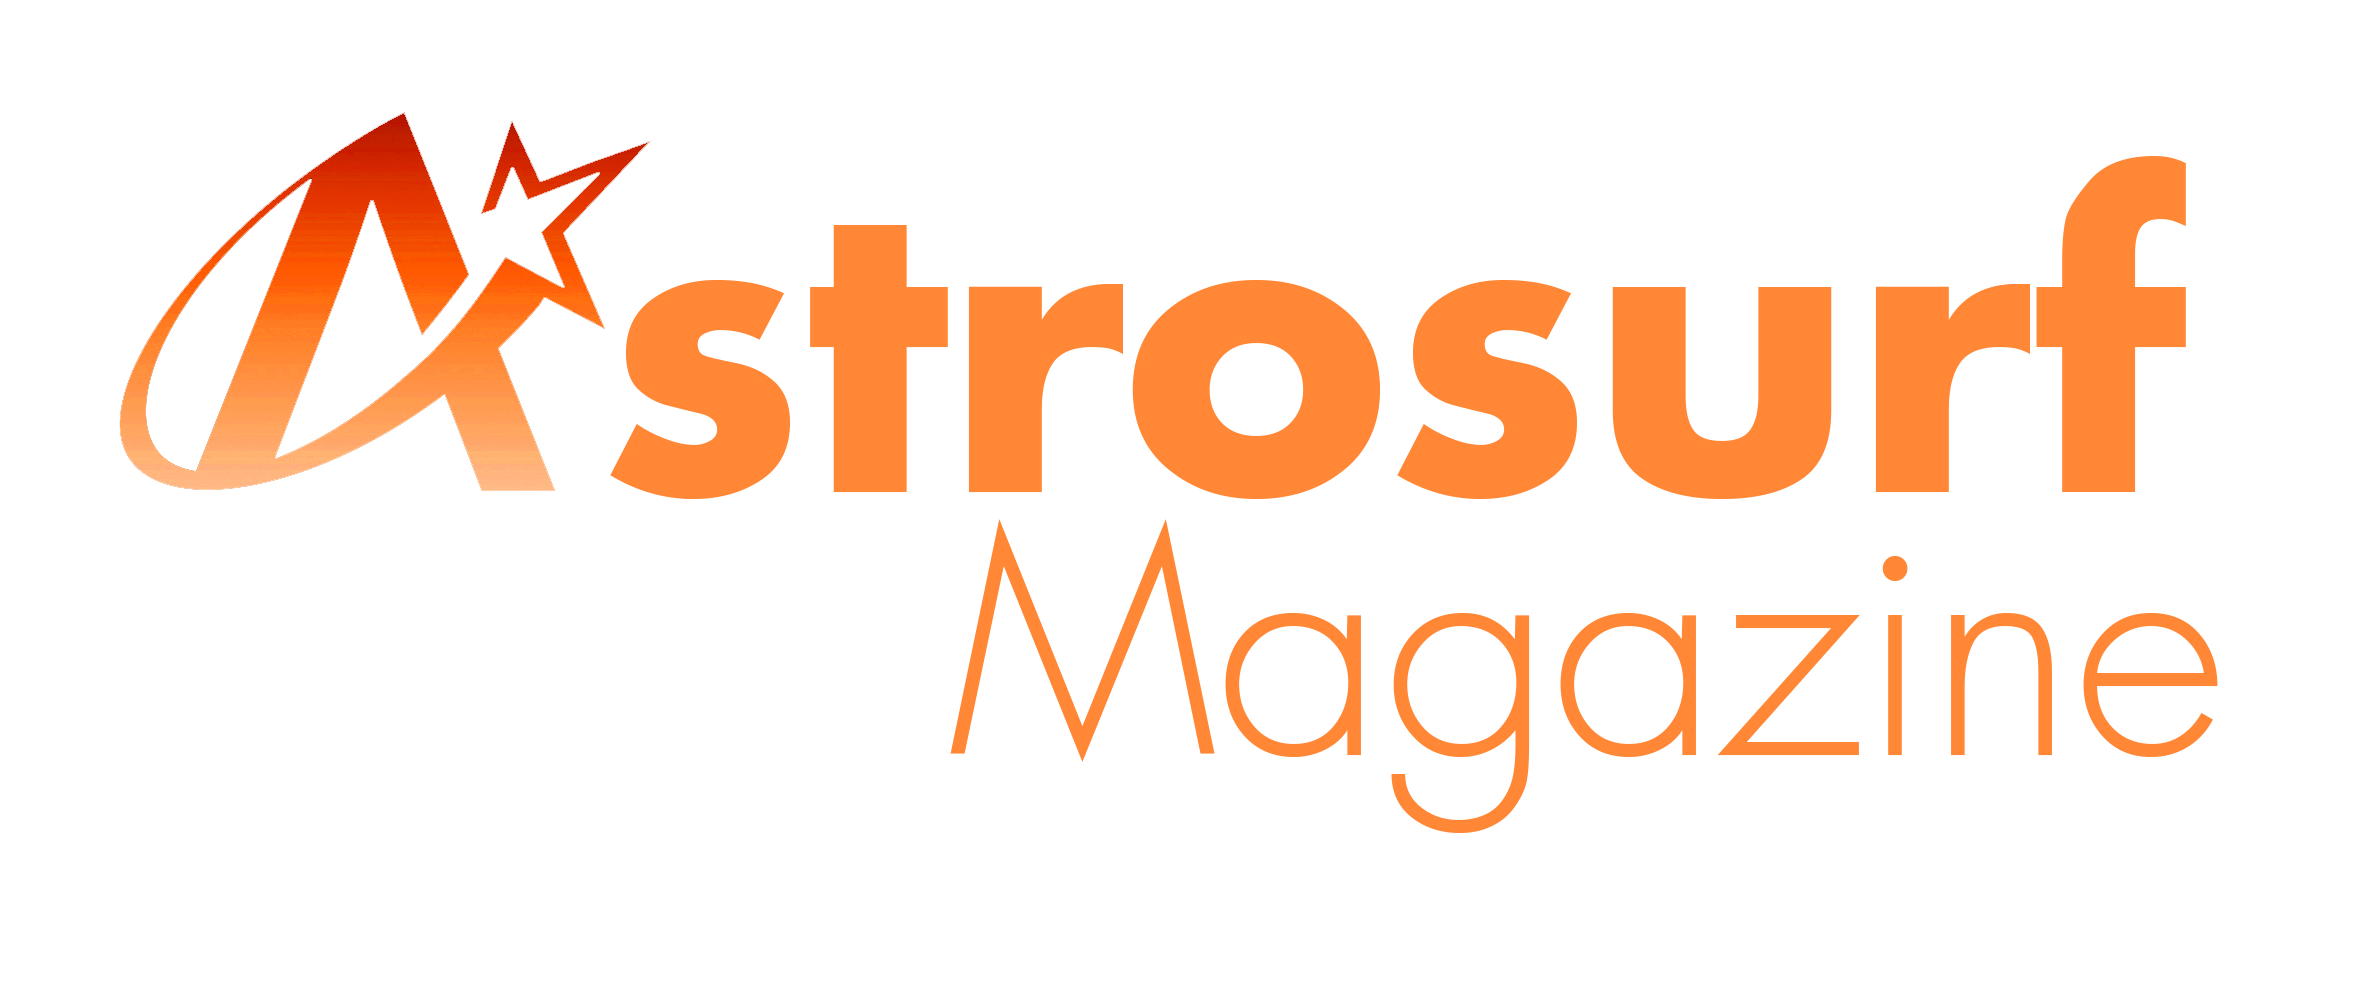 Astrosurf Magazine OrangeFondTransparent